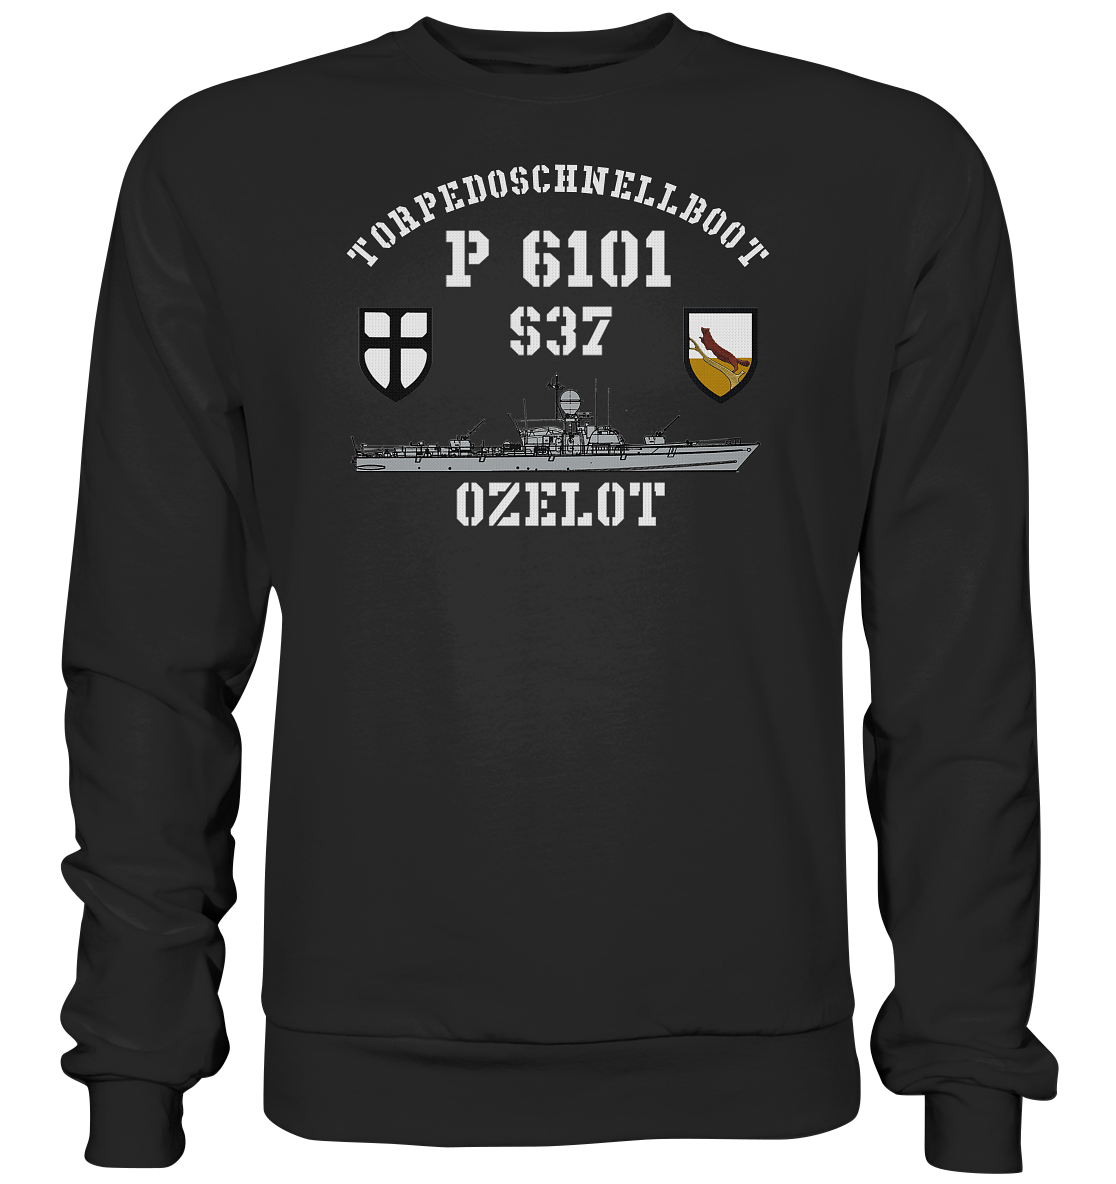 P 6101 S37 OZELOT - Premium Sweatshirt